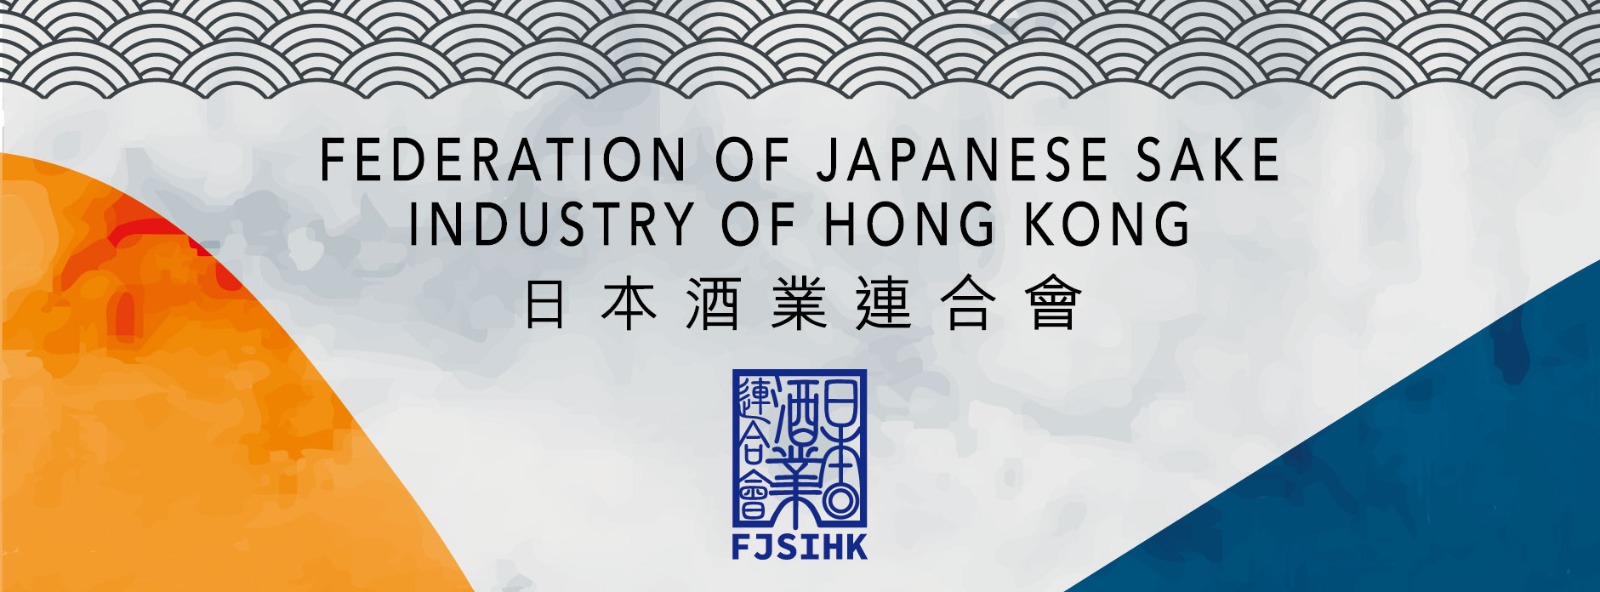 Federation of Japanese Sake industry of Hong Kong